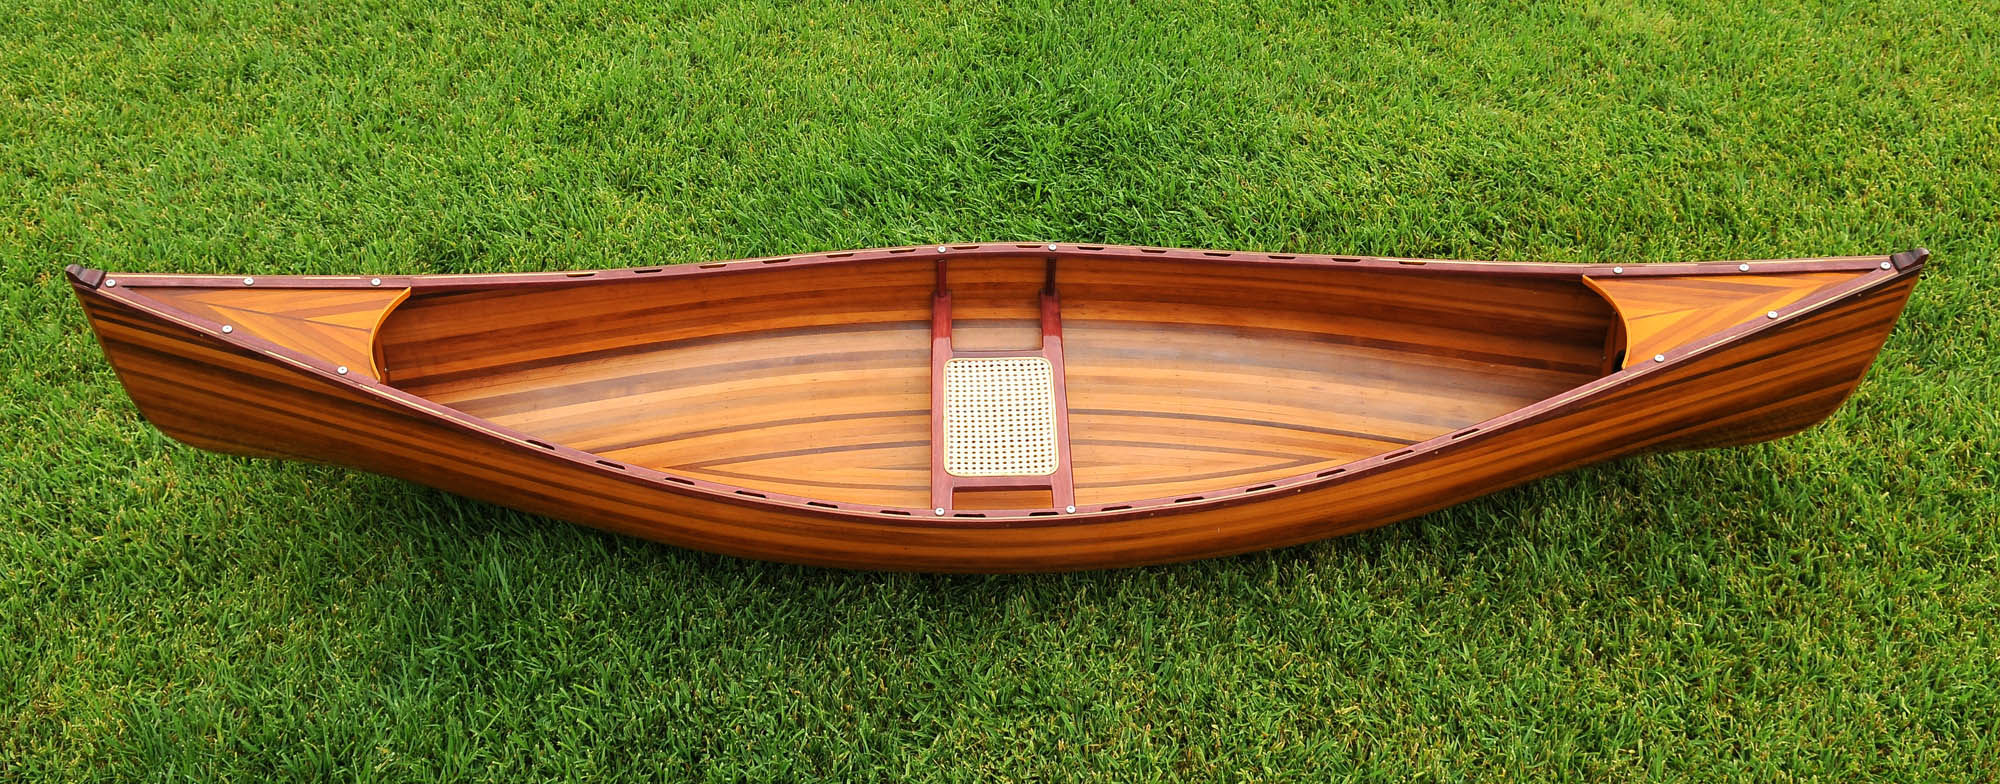 Shop wooden canoe décor masterpiece – Wooden Boat USA